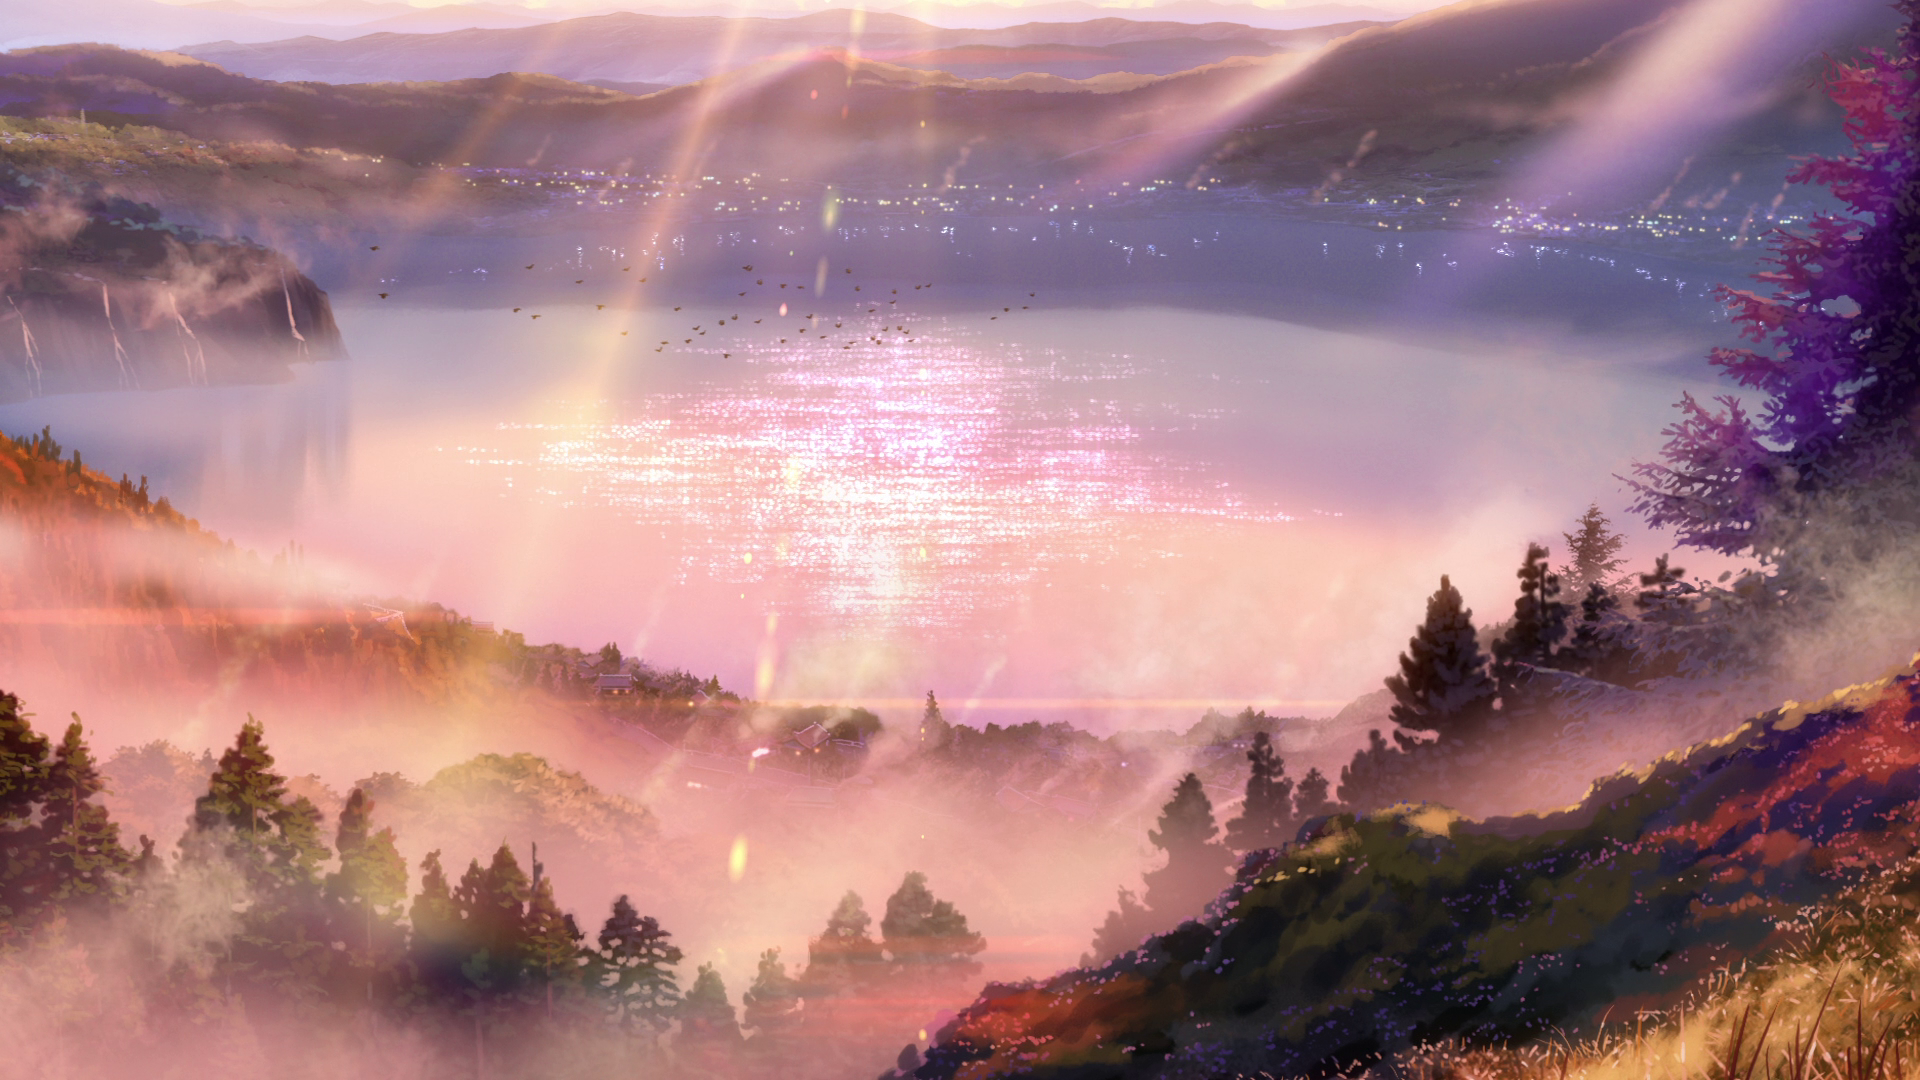 Anime 1920x1080 Kimi no Na Wa landscape mountains realistic field mist water lake pink